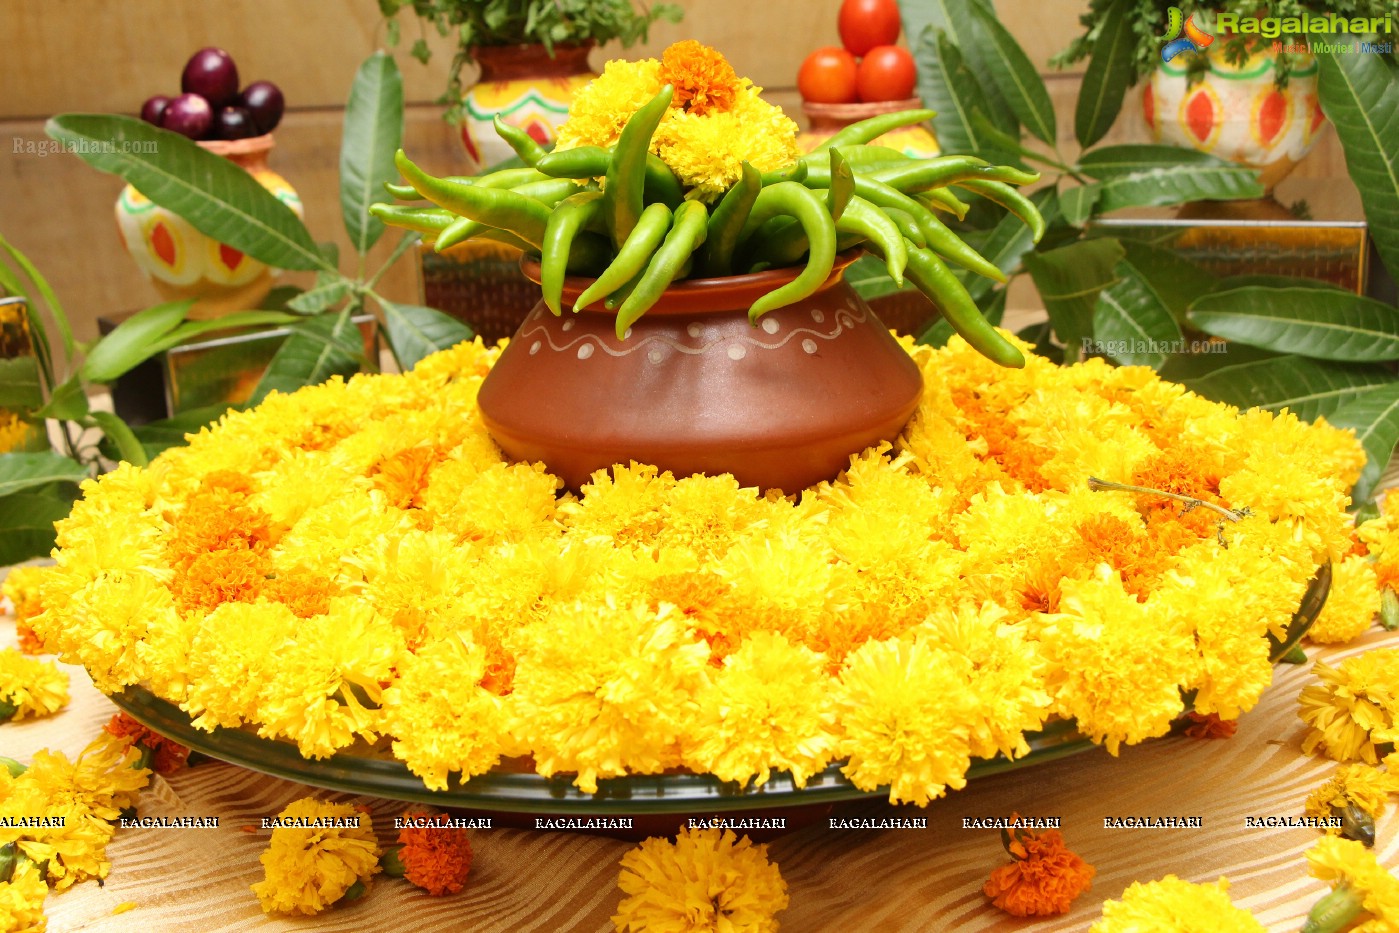 Telangana Food Festival at Hotel Novotel Hyderabad Convention Centre